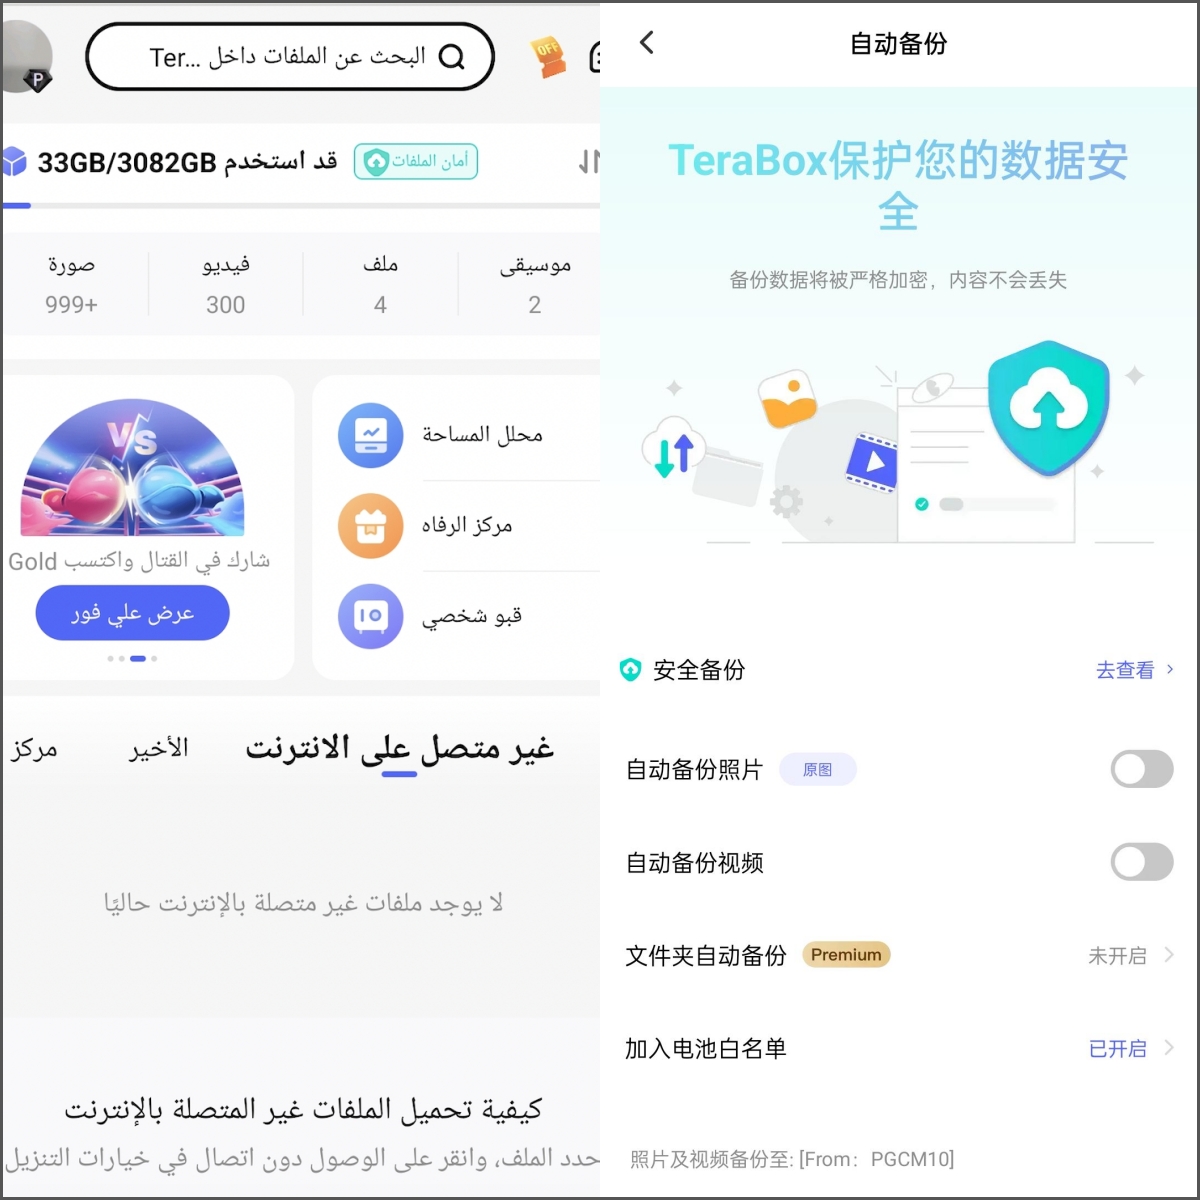 TeraBox - Arabic-speaking and Chinese-speaking